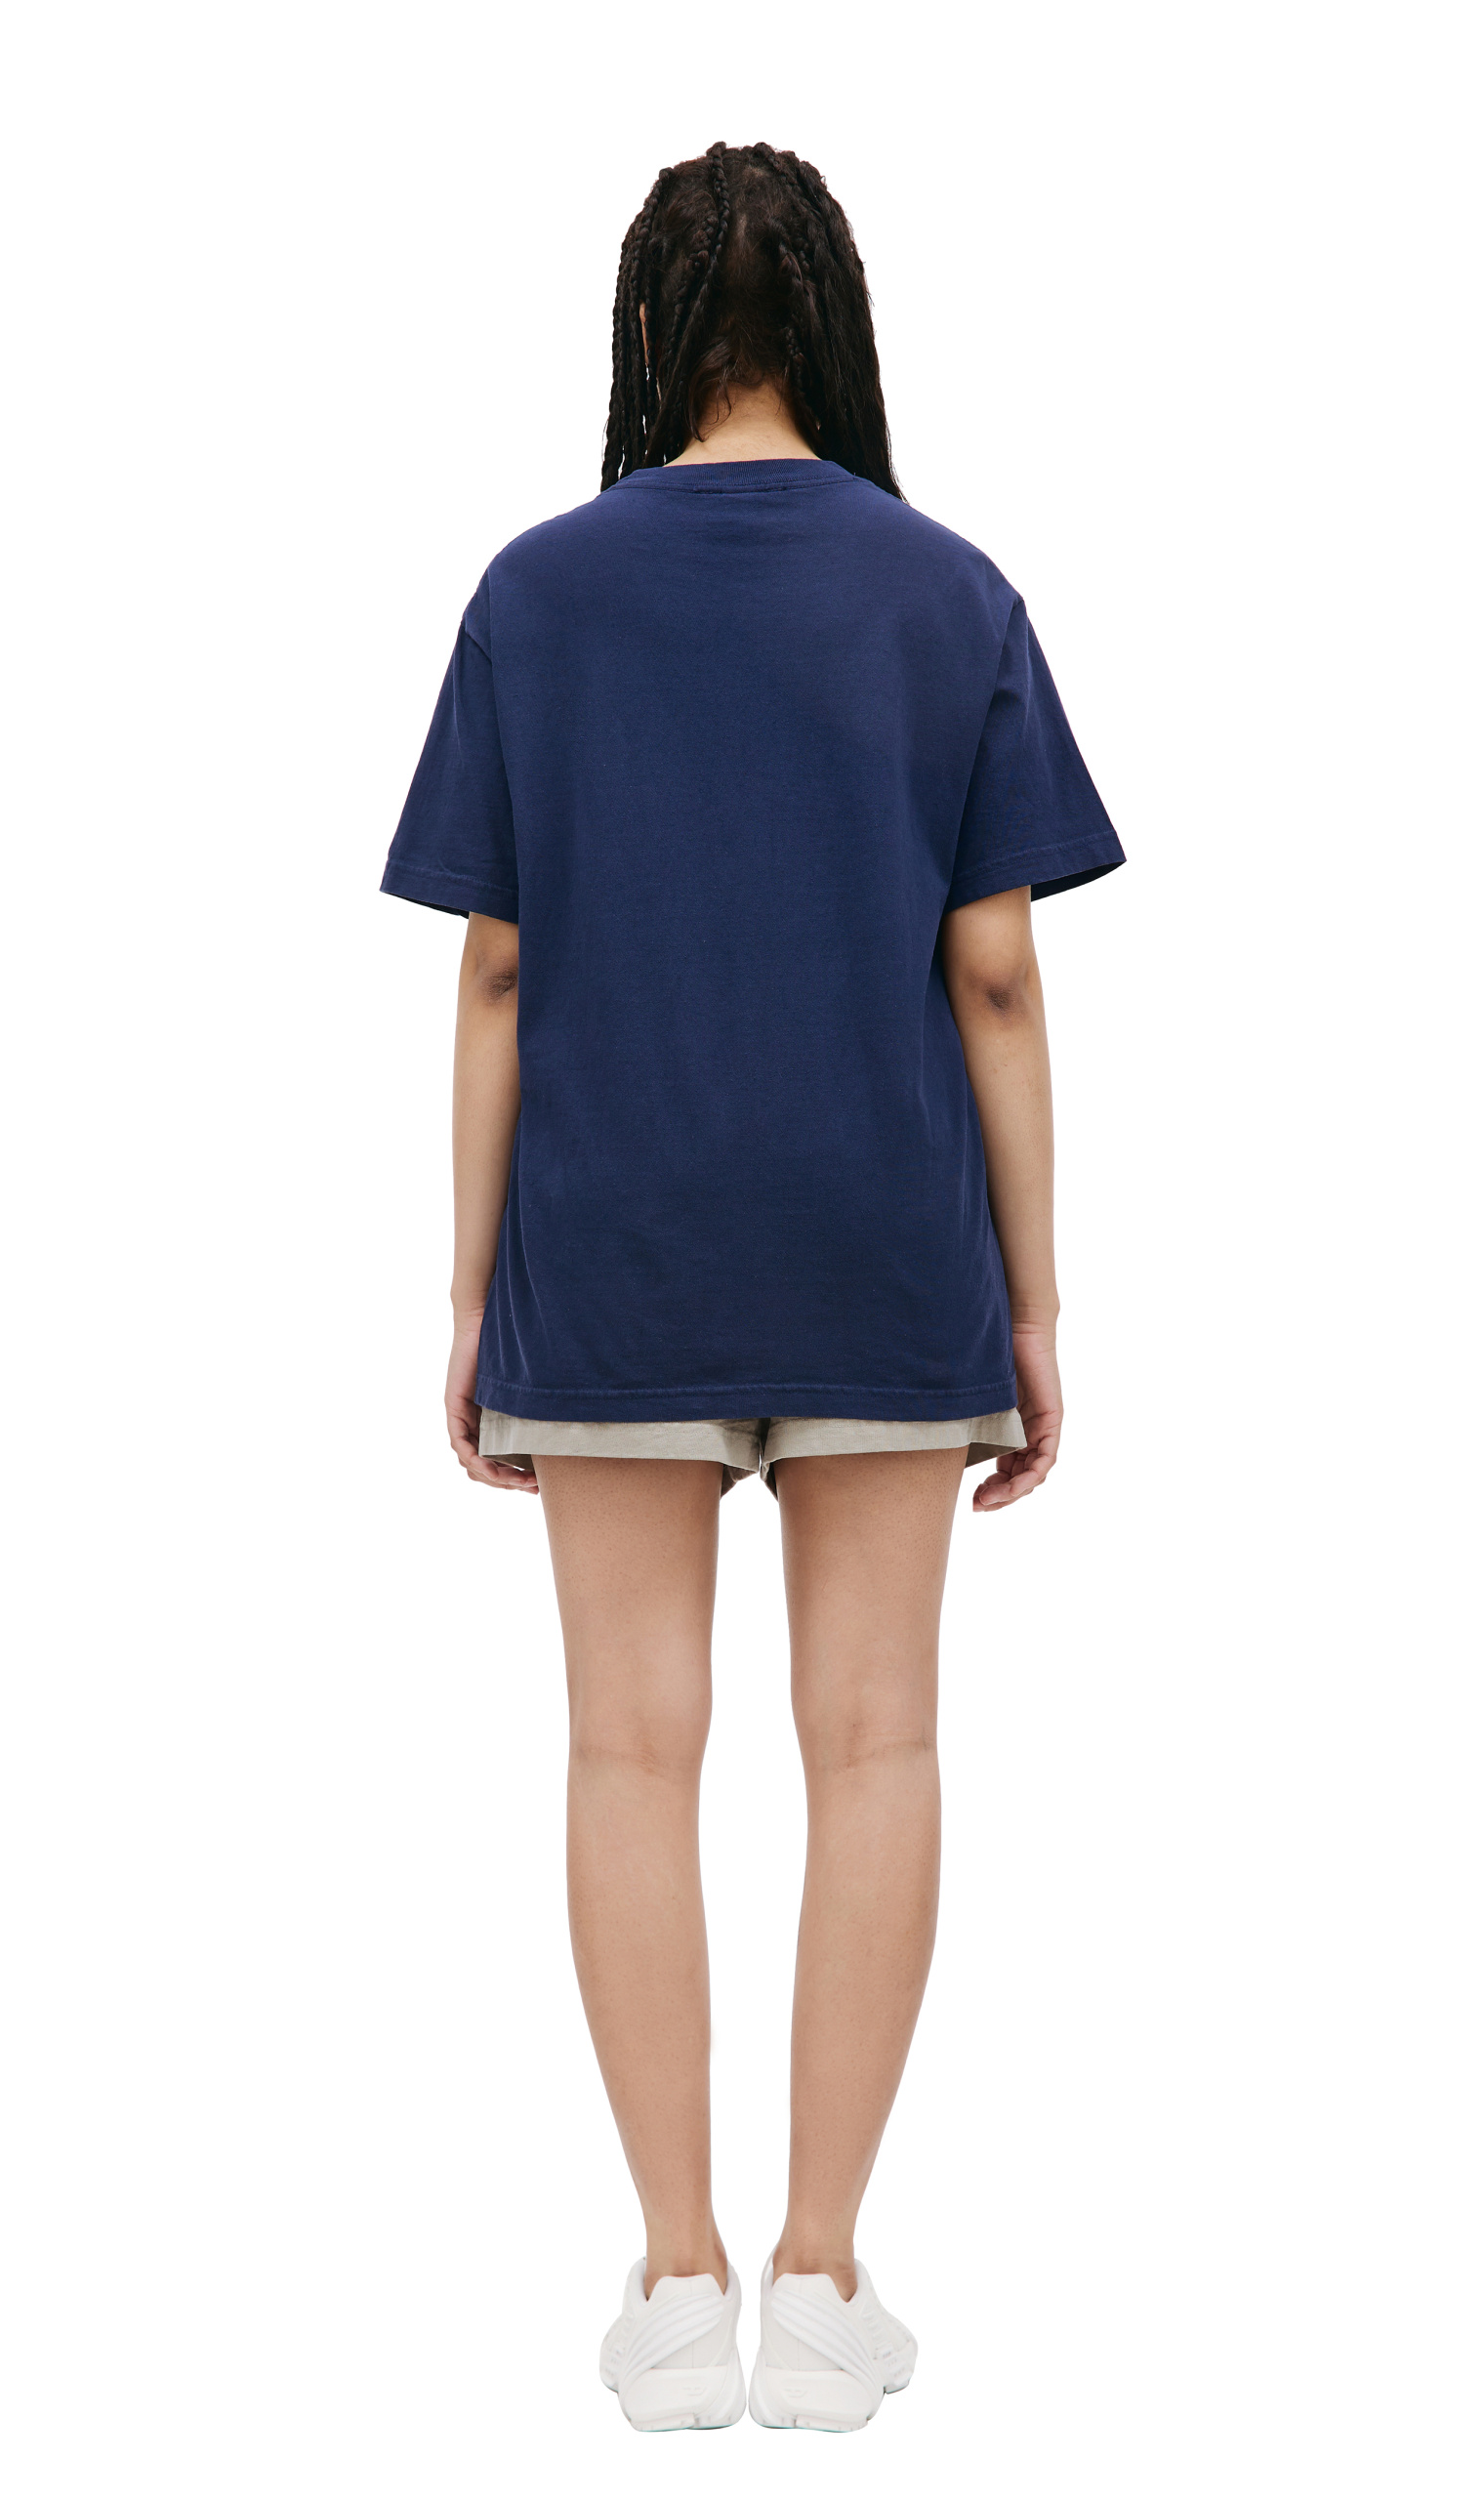 SPORTY & RICH Navy blue Vendome t-shirt